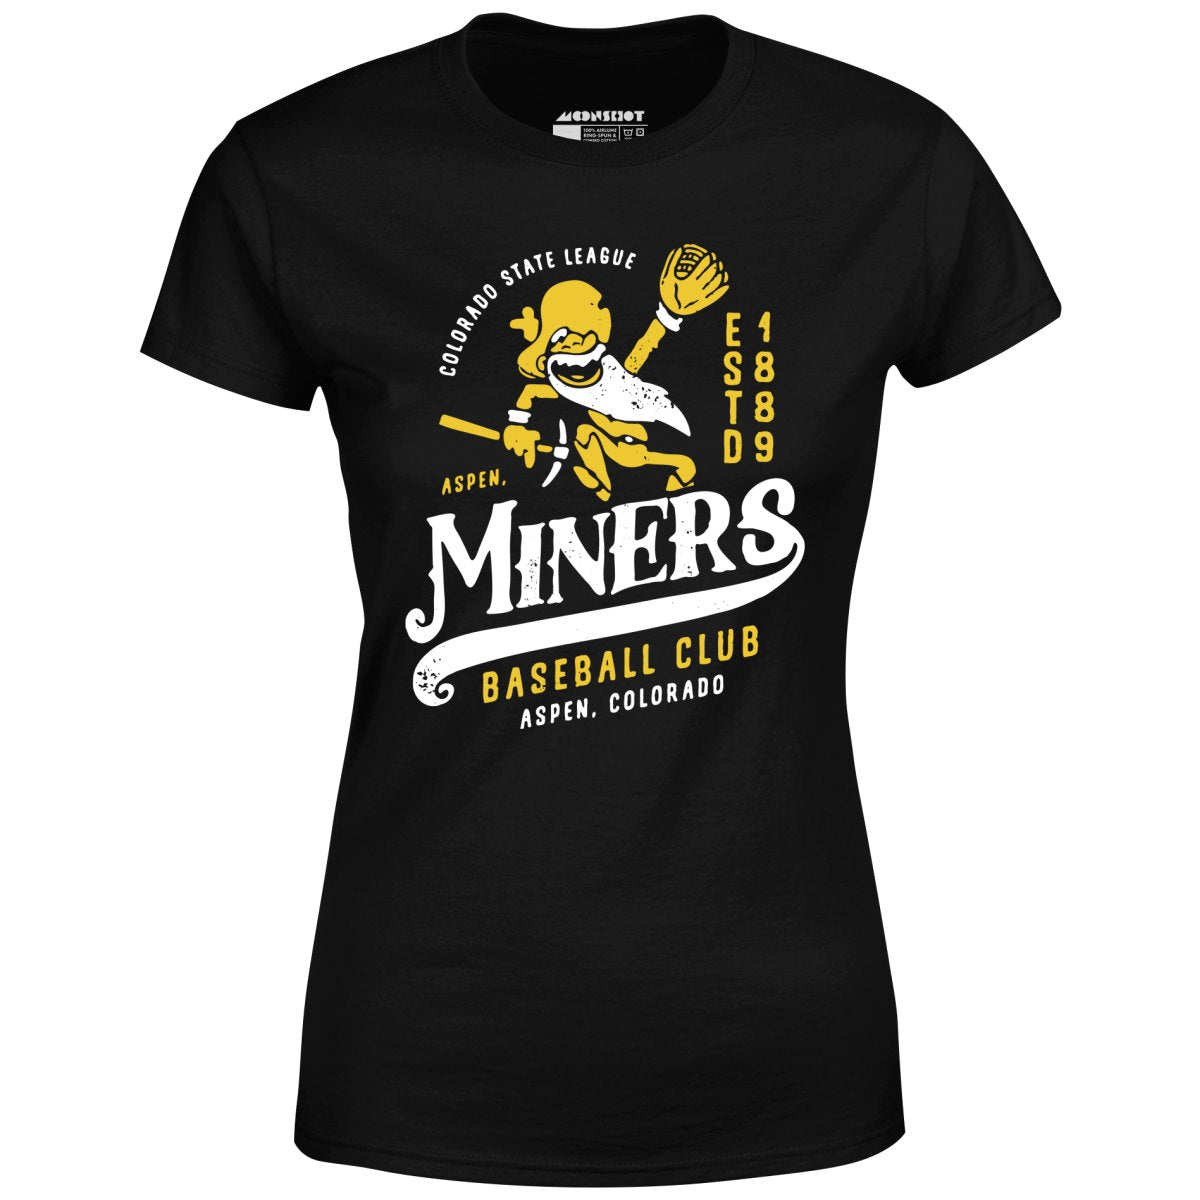 Aspen Miners - Colorado - Vintage Defunct Baseball Teams - Women's T-Shirt